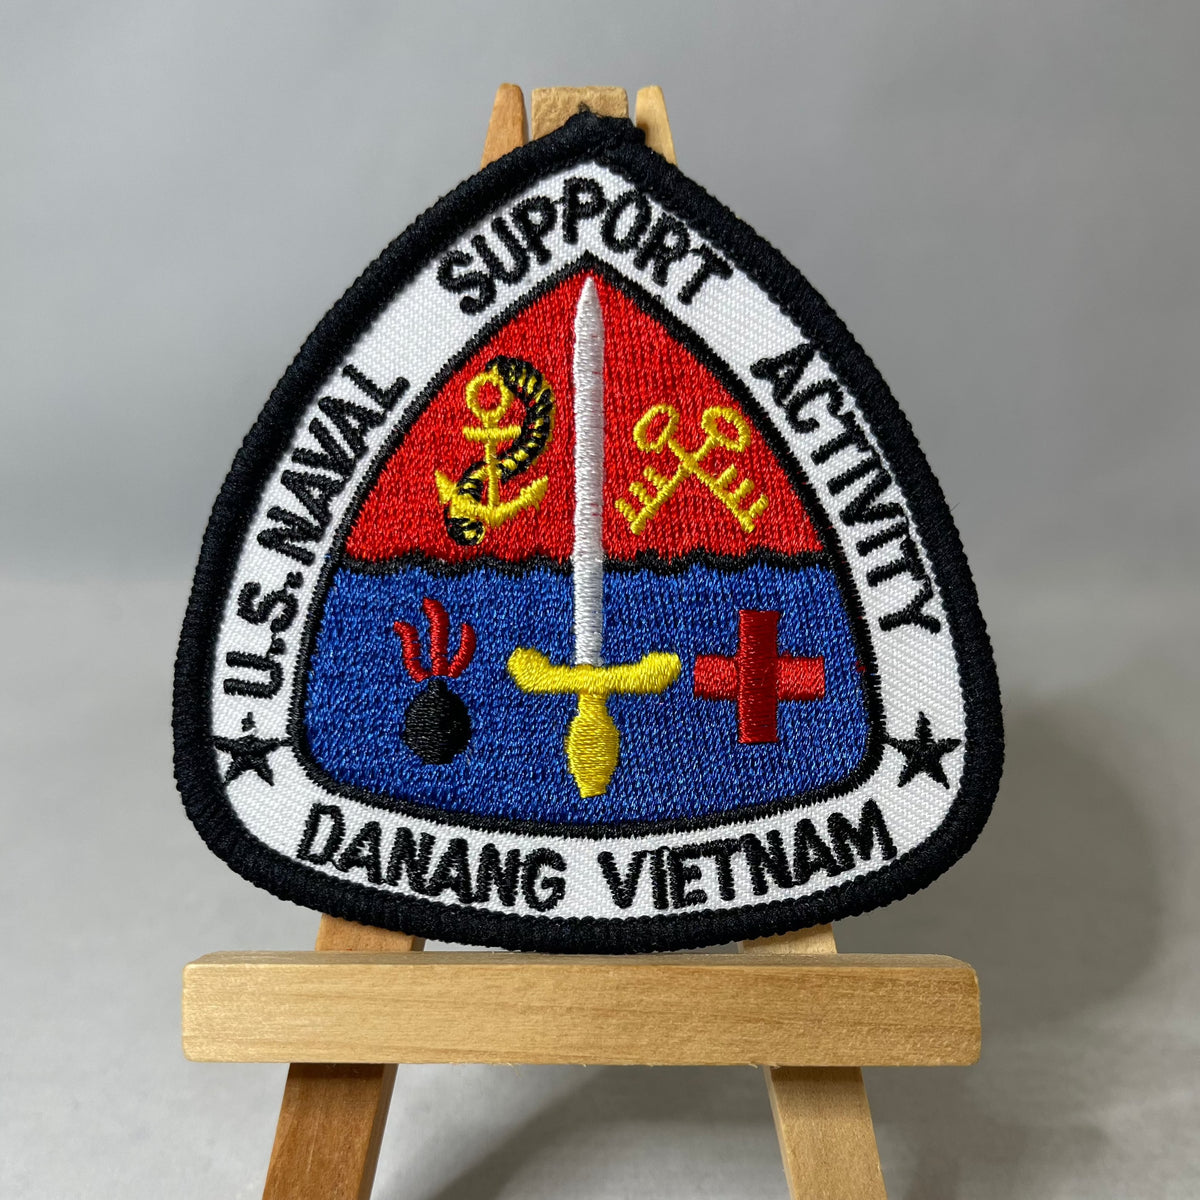 US Naval Support Activity - Danang Vietnam Patch